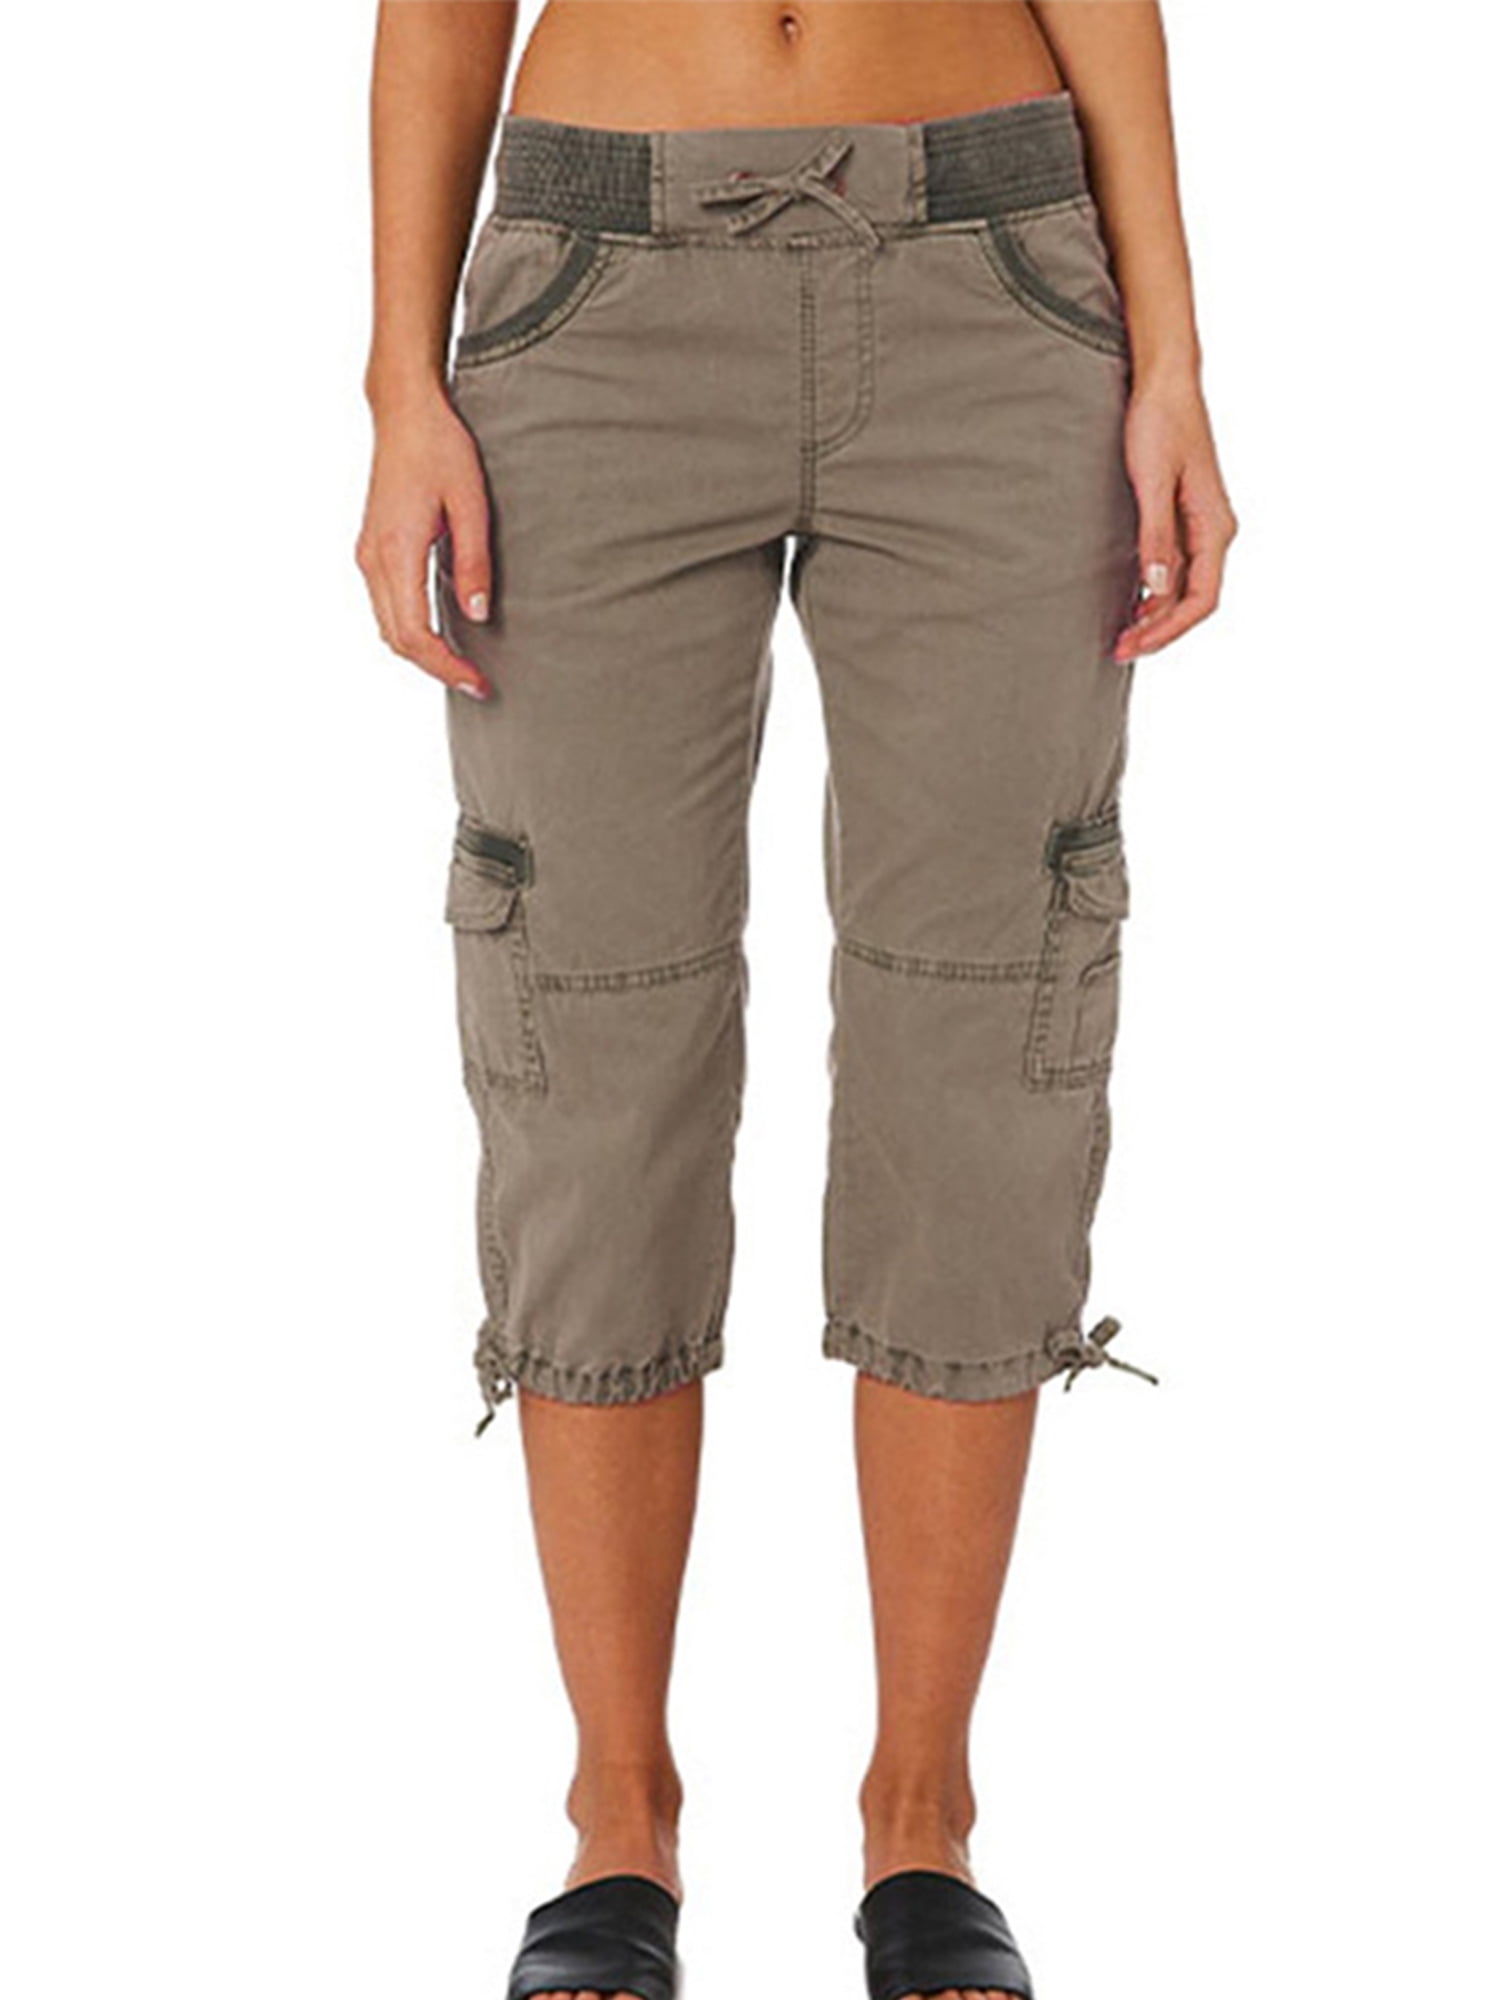 Frontwalk Hight Waist Crop Pants For Women Summer Drawstring Jogger  Sweatpants Casual Beach Cargo Capri Pants Size S-3XL Blue L 